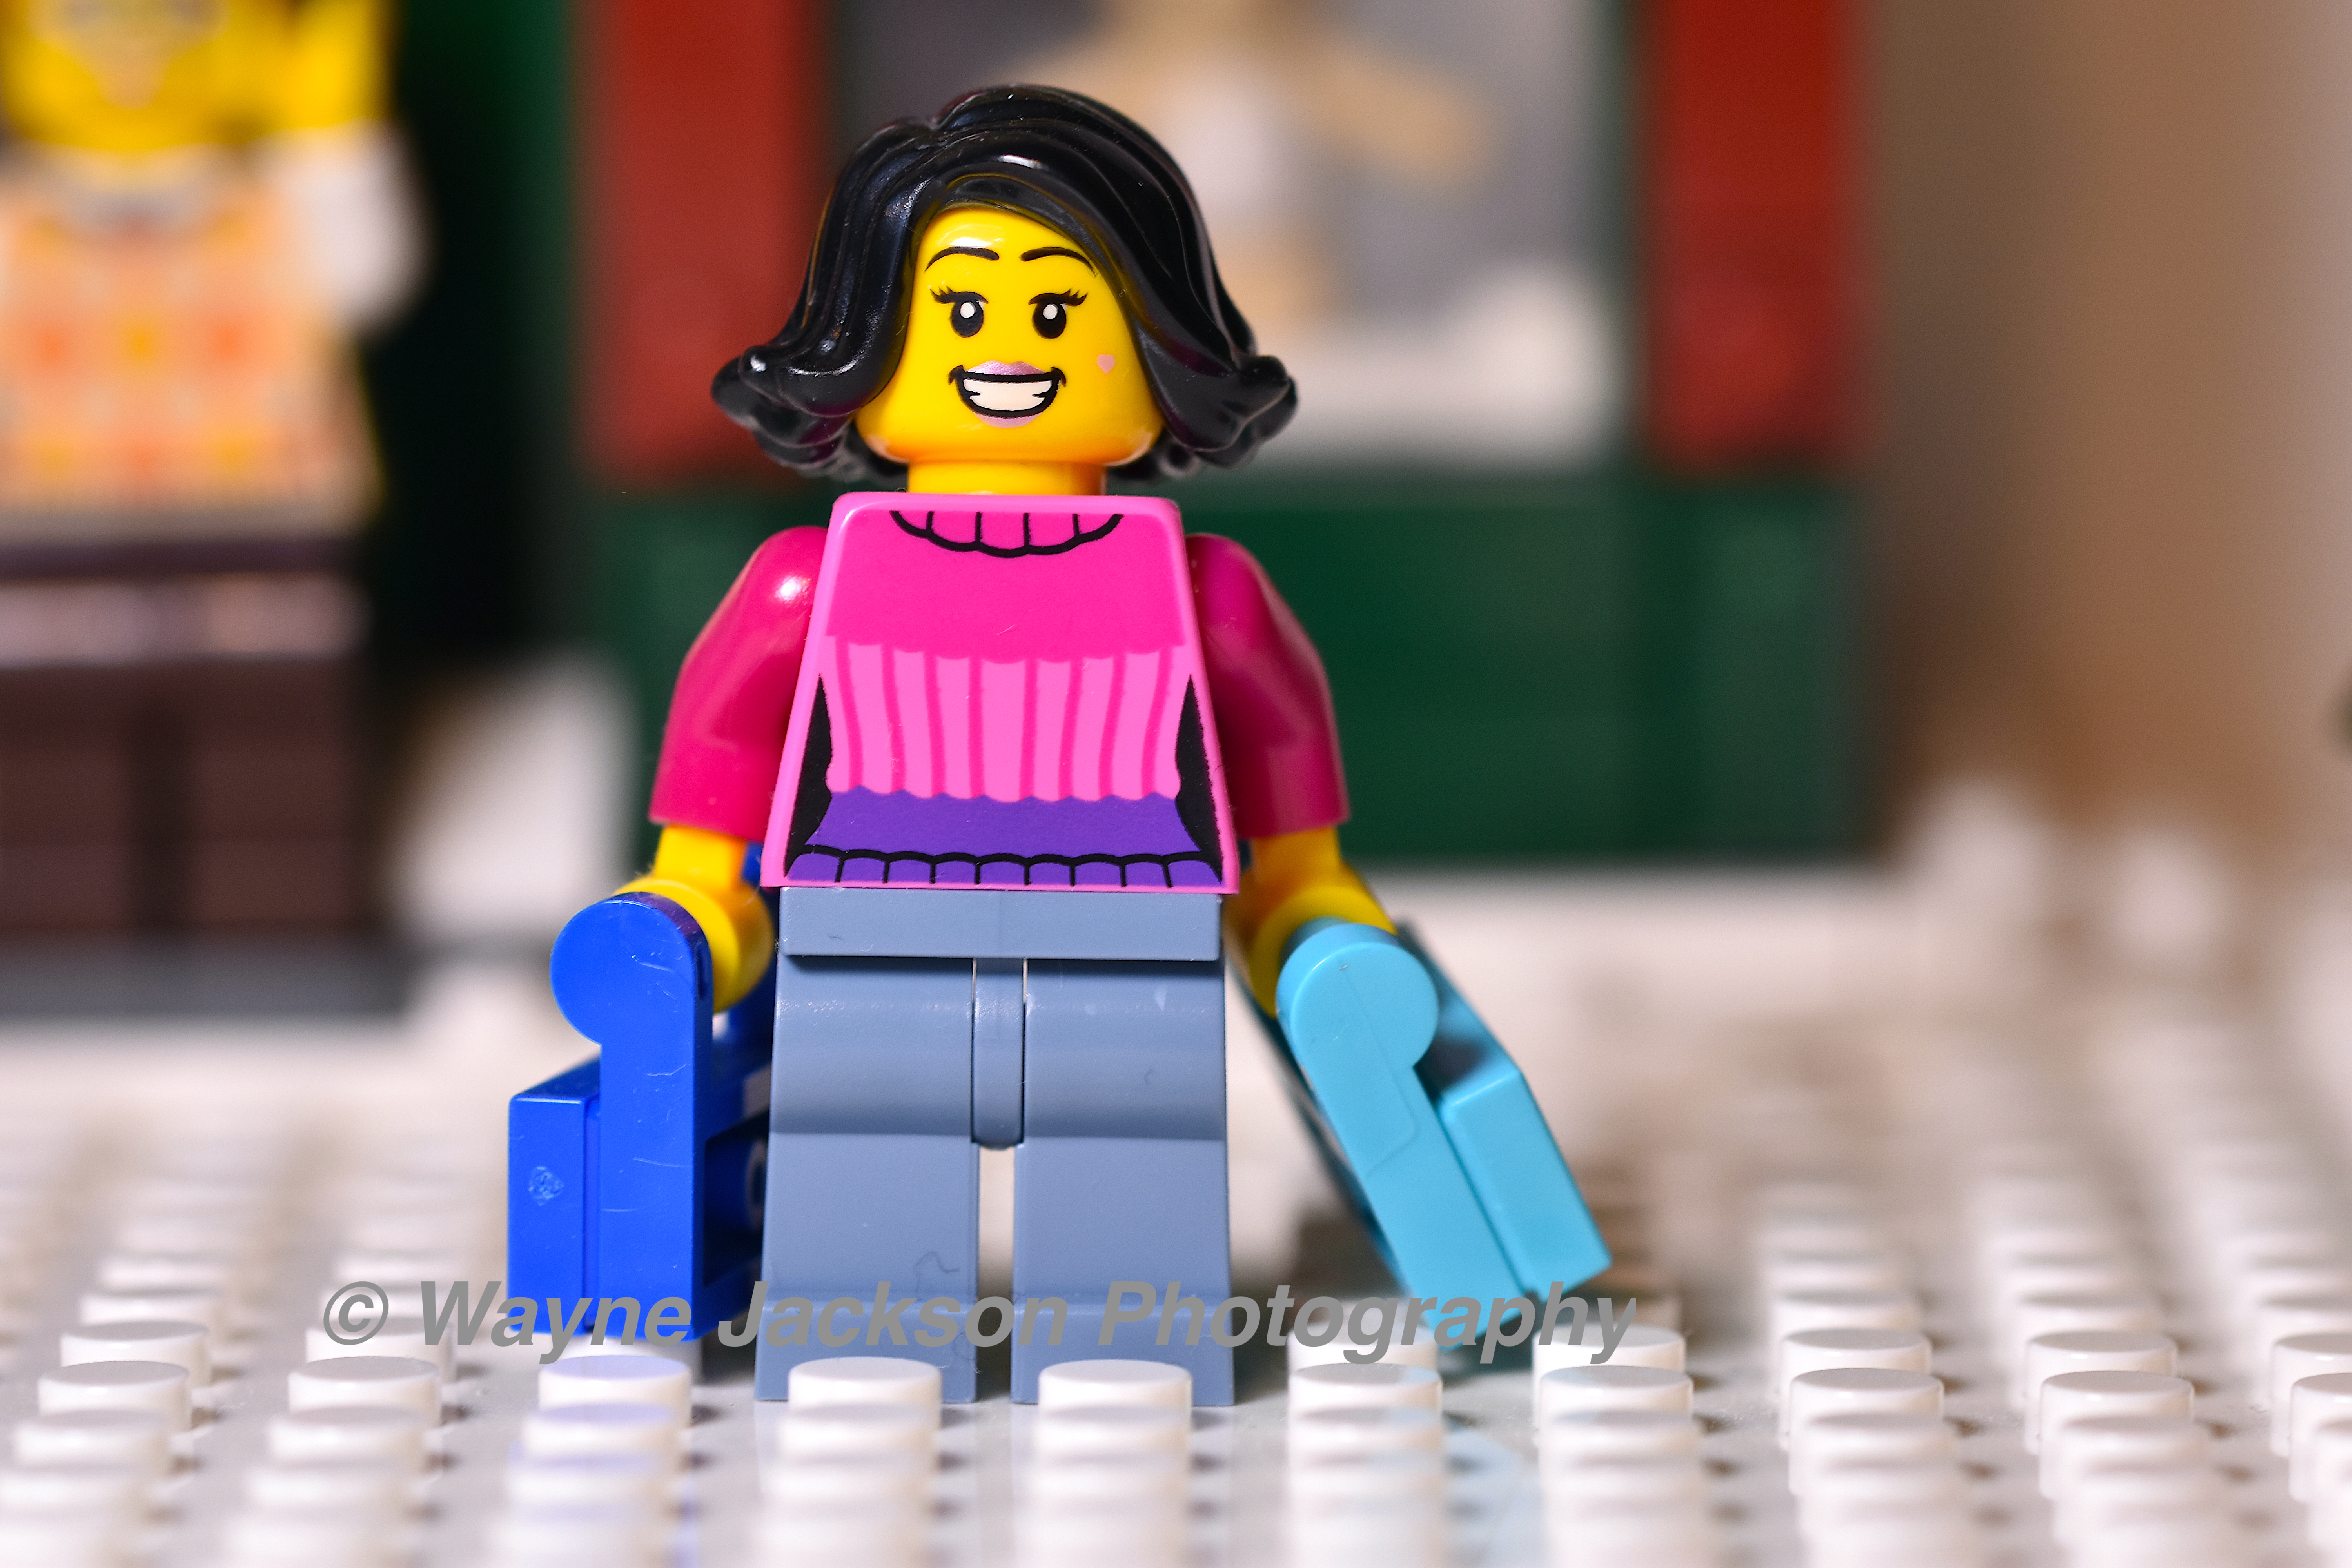 A Lego lady minifigure Christmas shopping